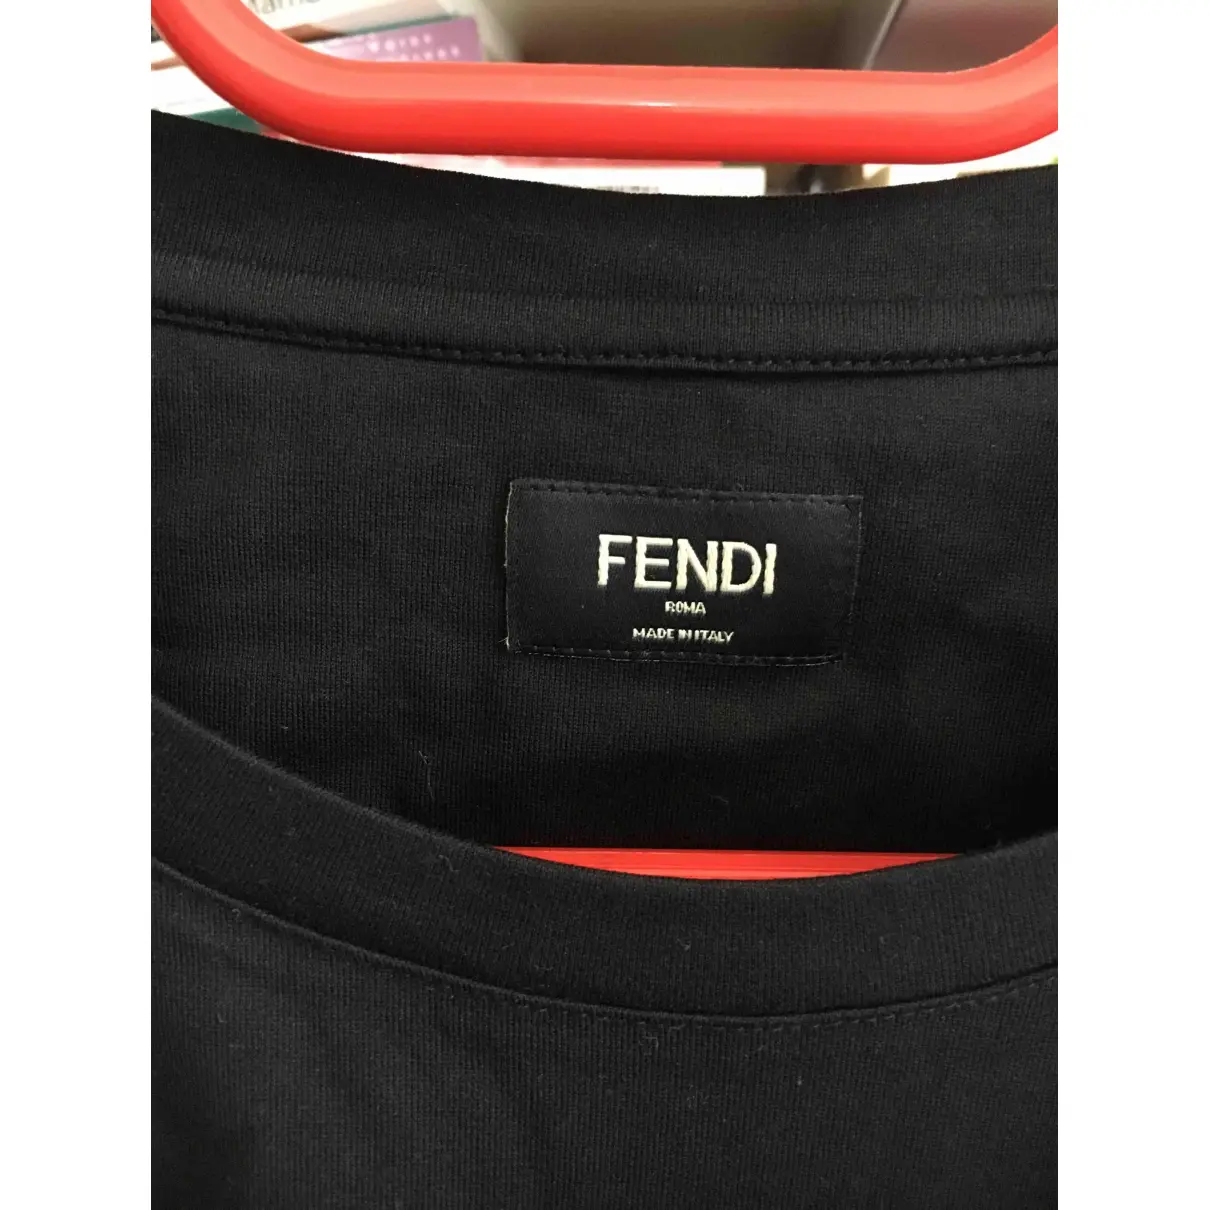 Buy Fendi Black Cotton T-shirt online